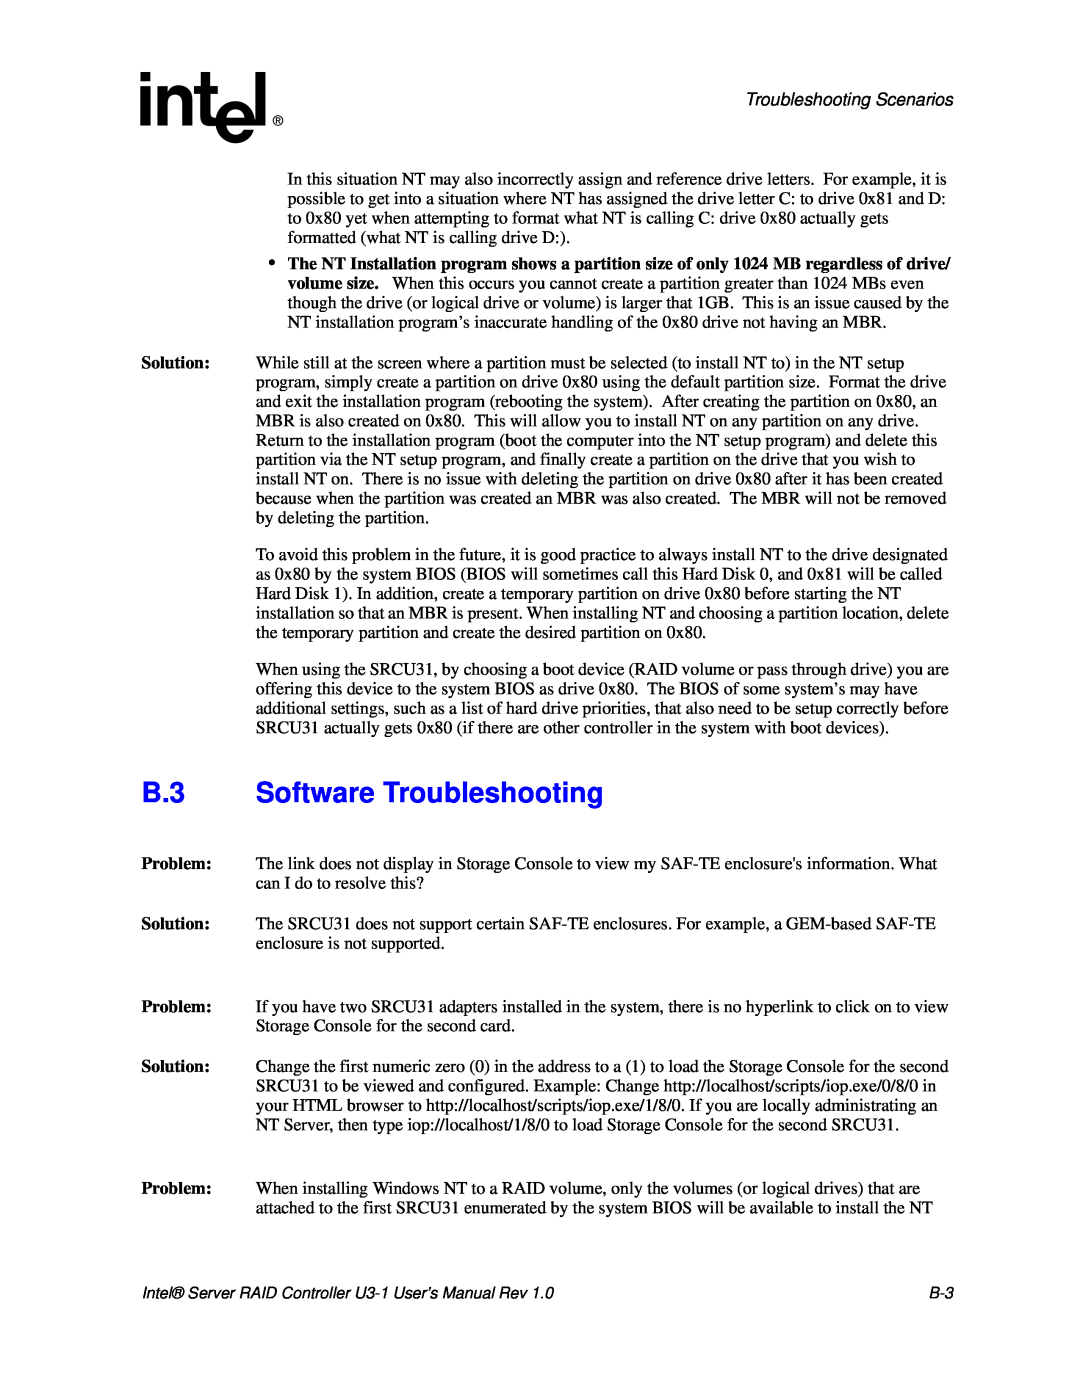 Intel SRCU31 user manual B.3 Software Troubleshooting, Troubleshooting Scenarios 